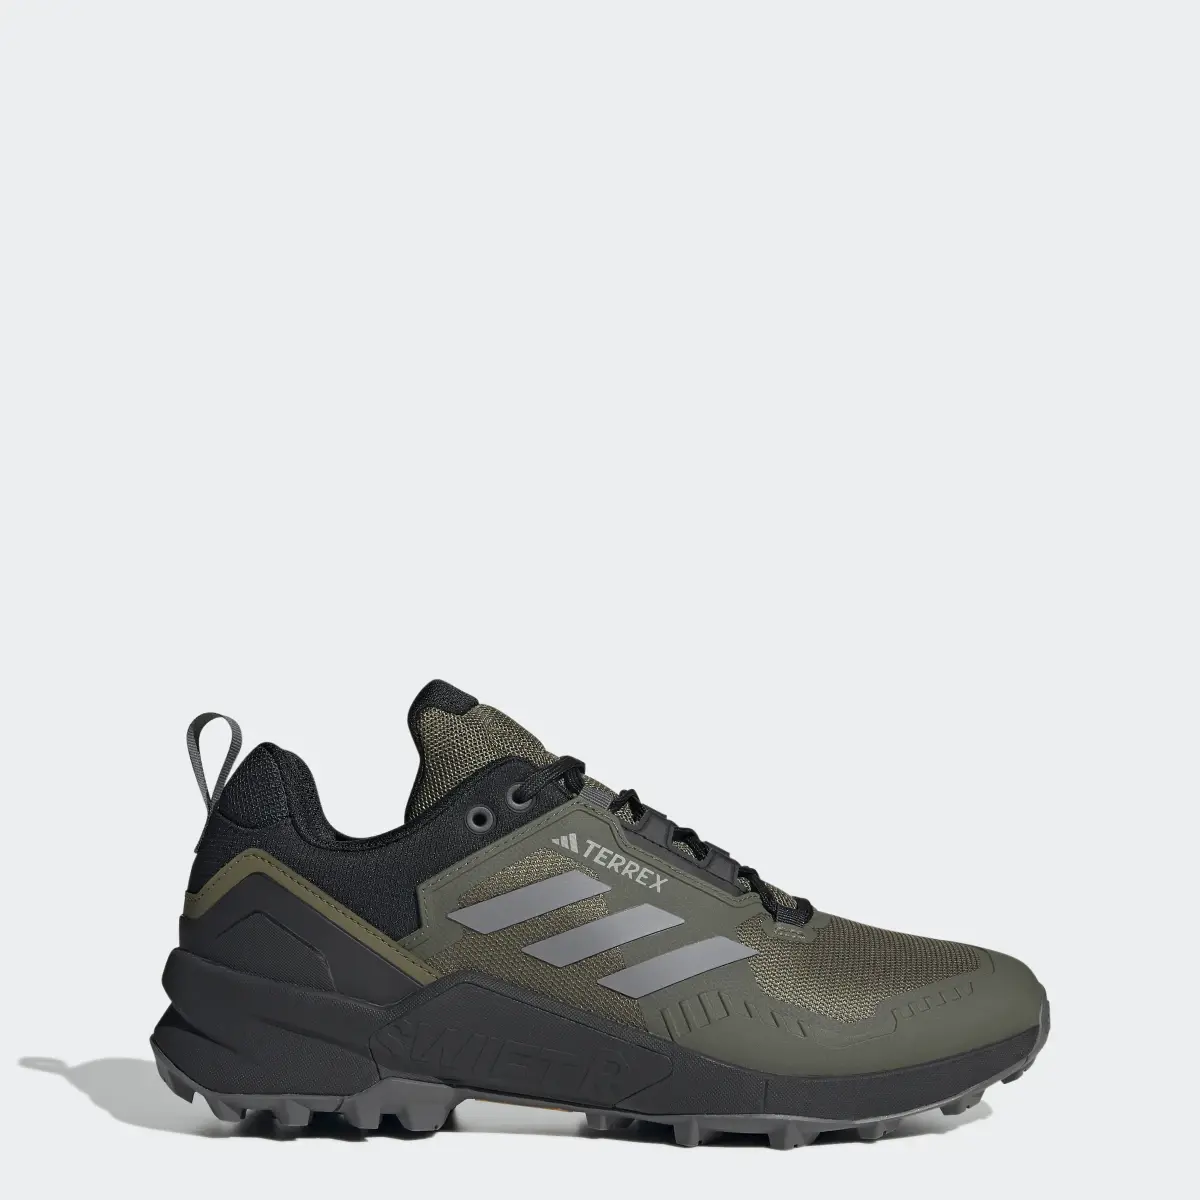 Adidas Terrex Swift R3 Hiking Shoes. 1